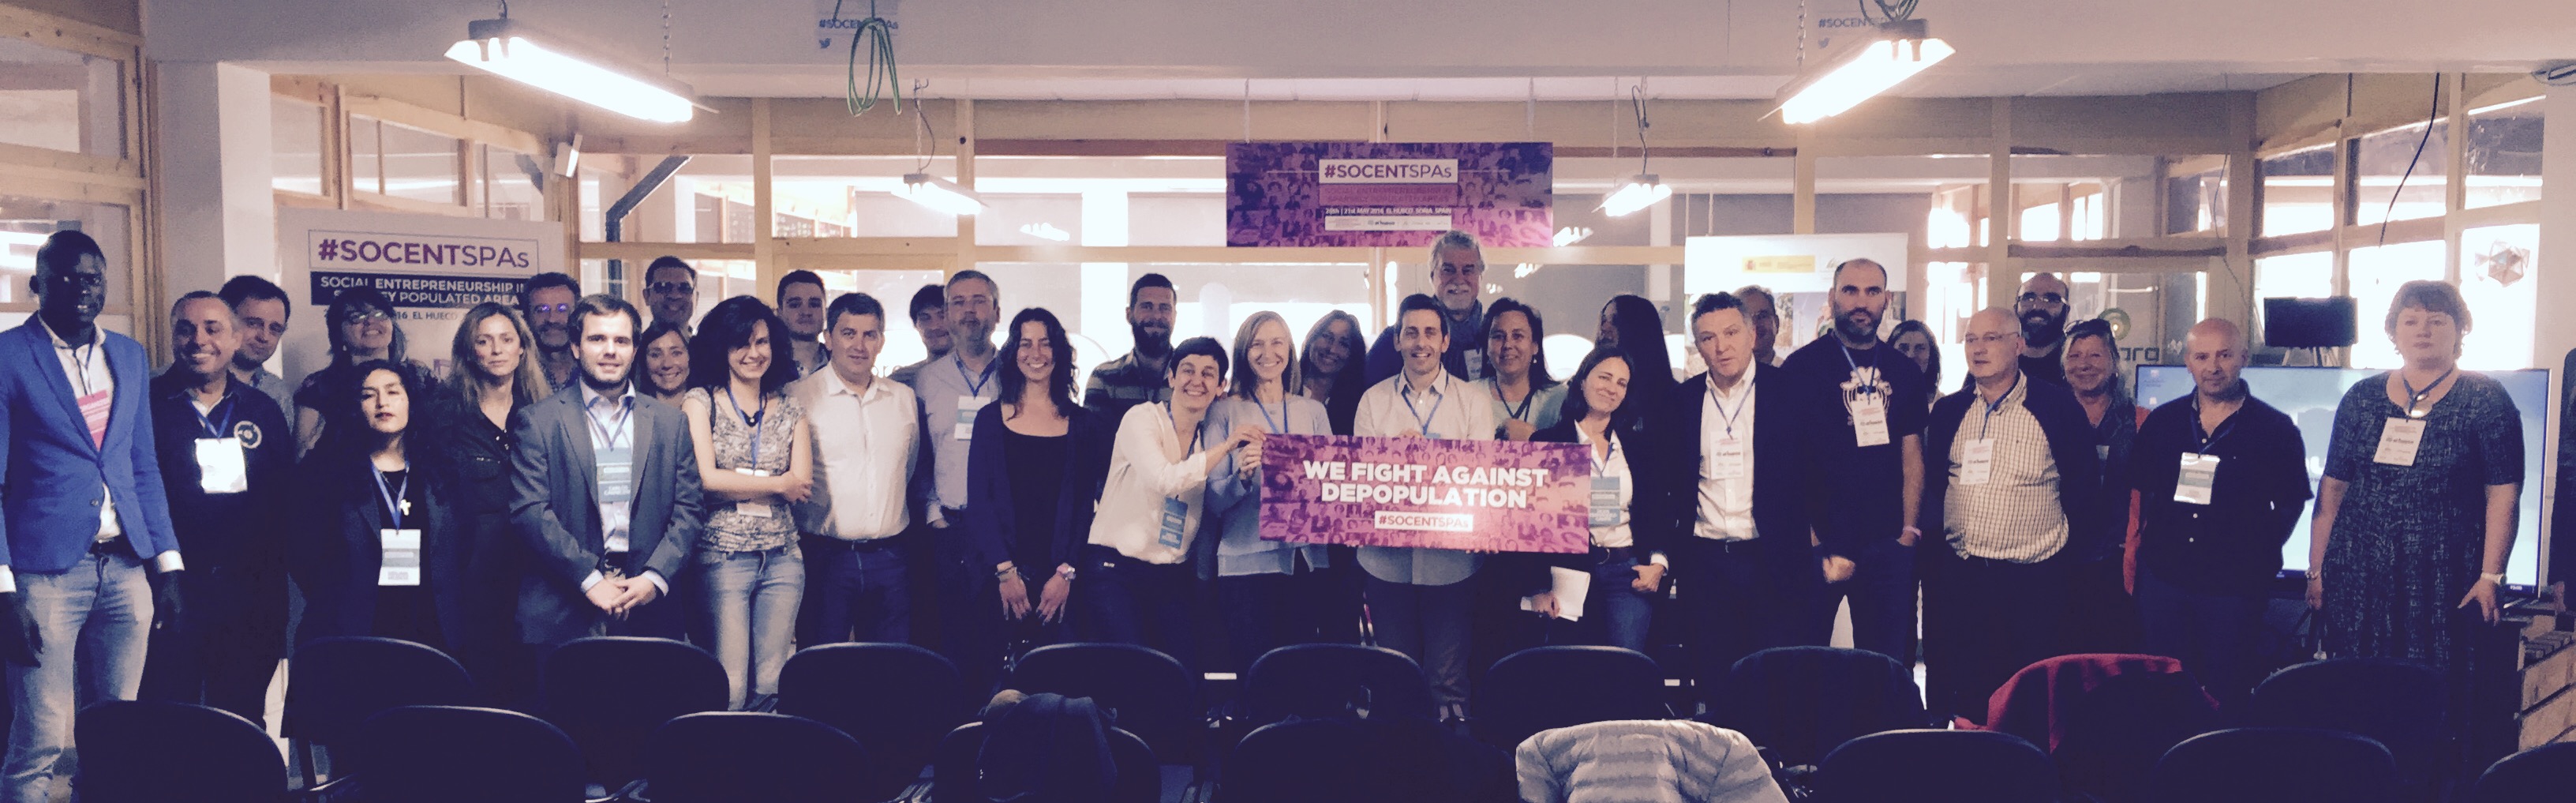 II Declaration of Soria. Now or never: rely on social entrepreneurship